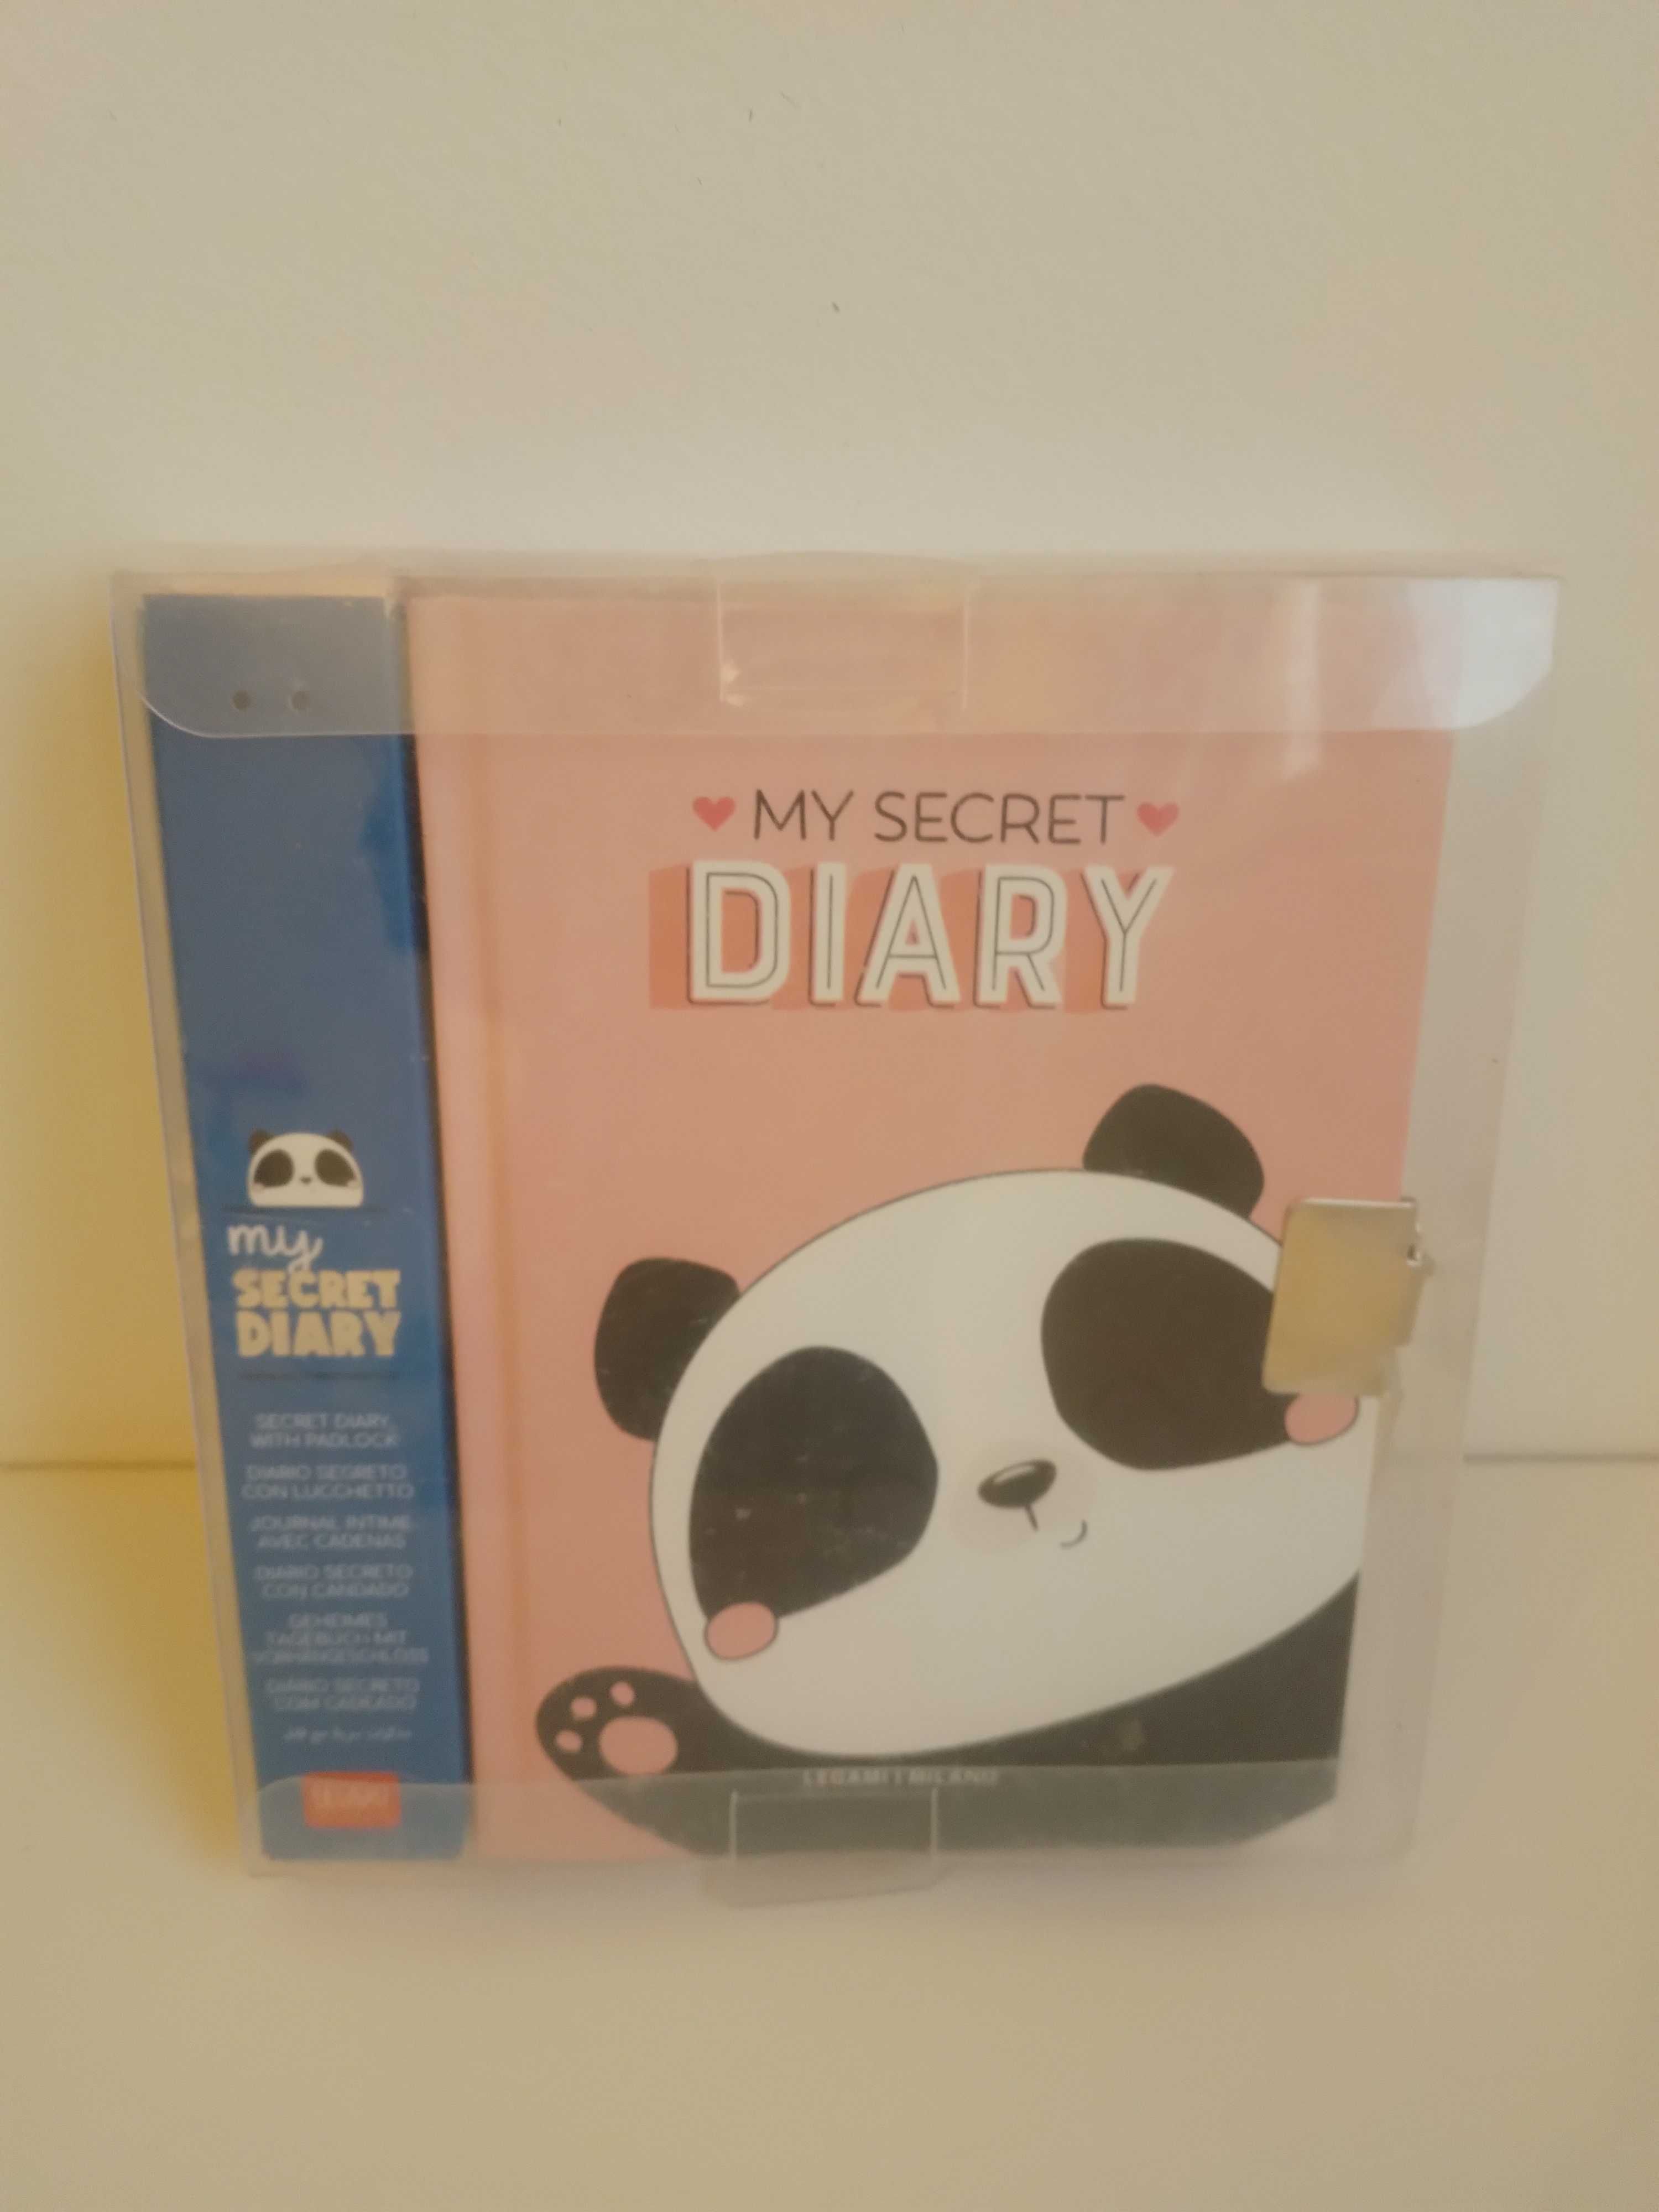 "My secret Diary" NOVO